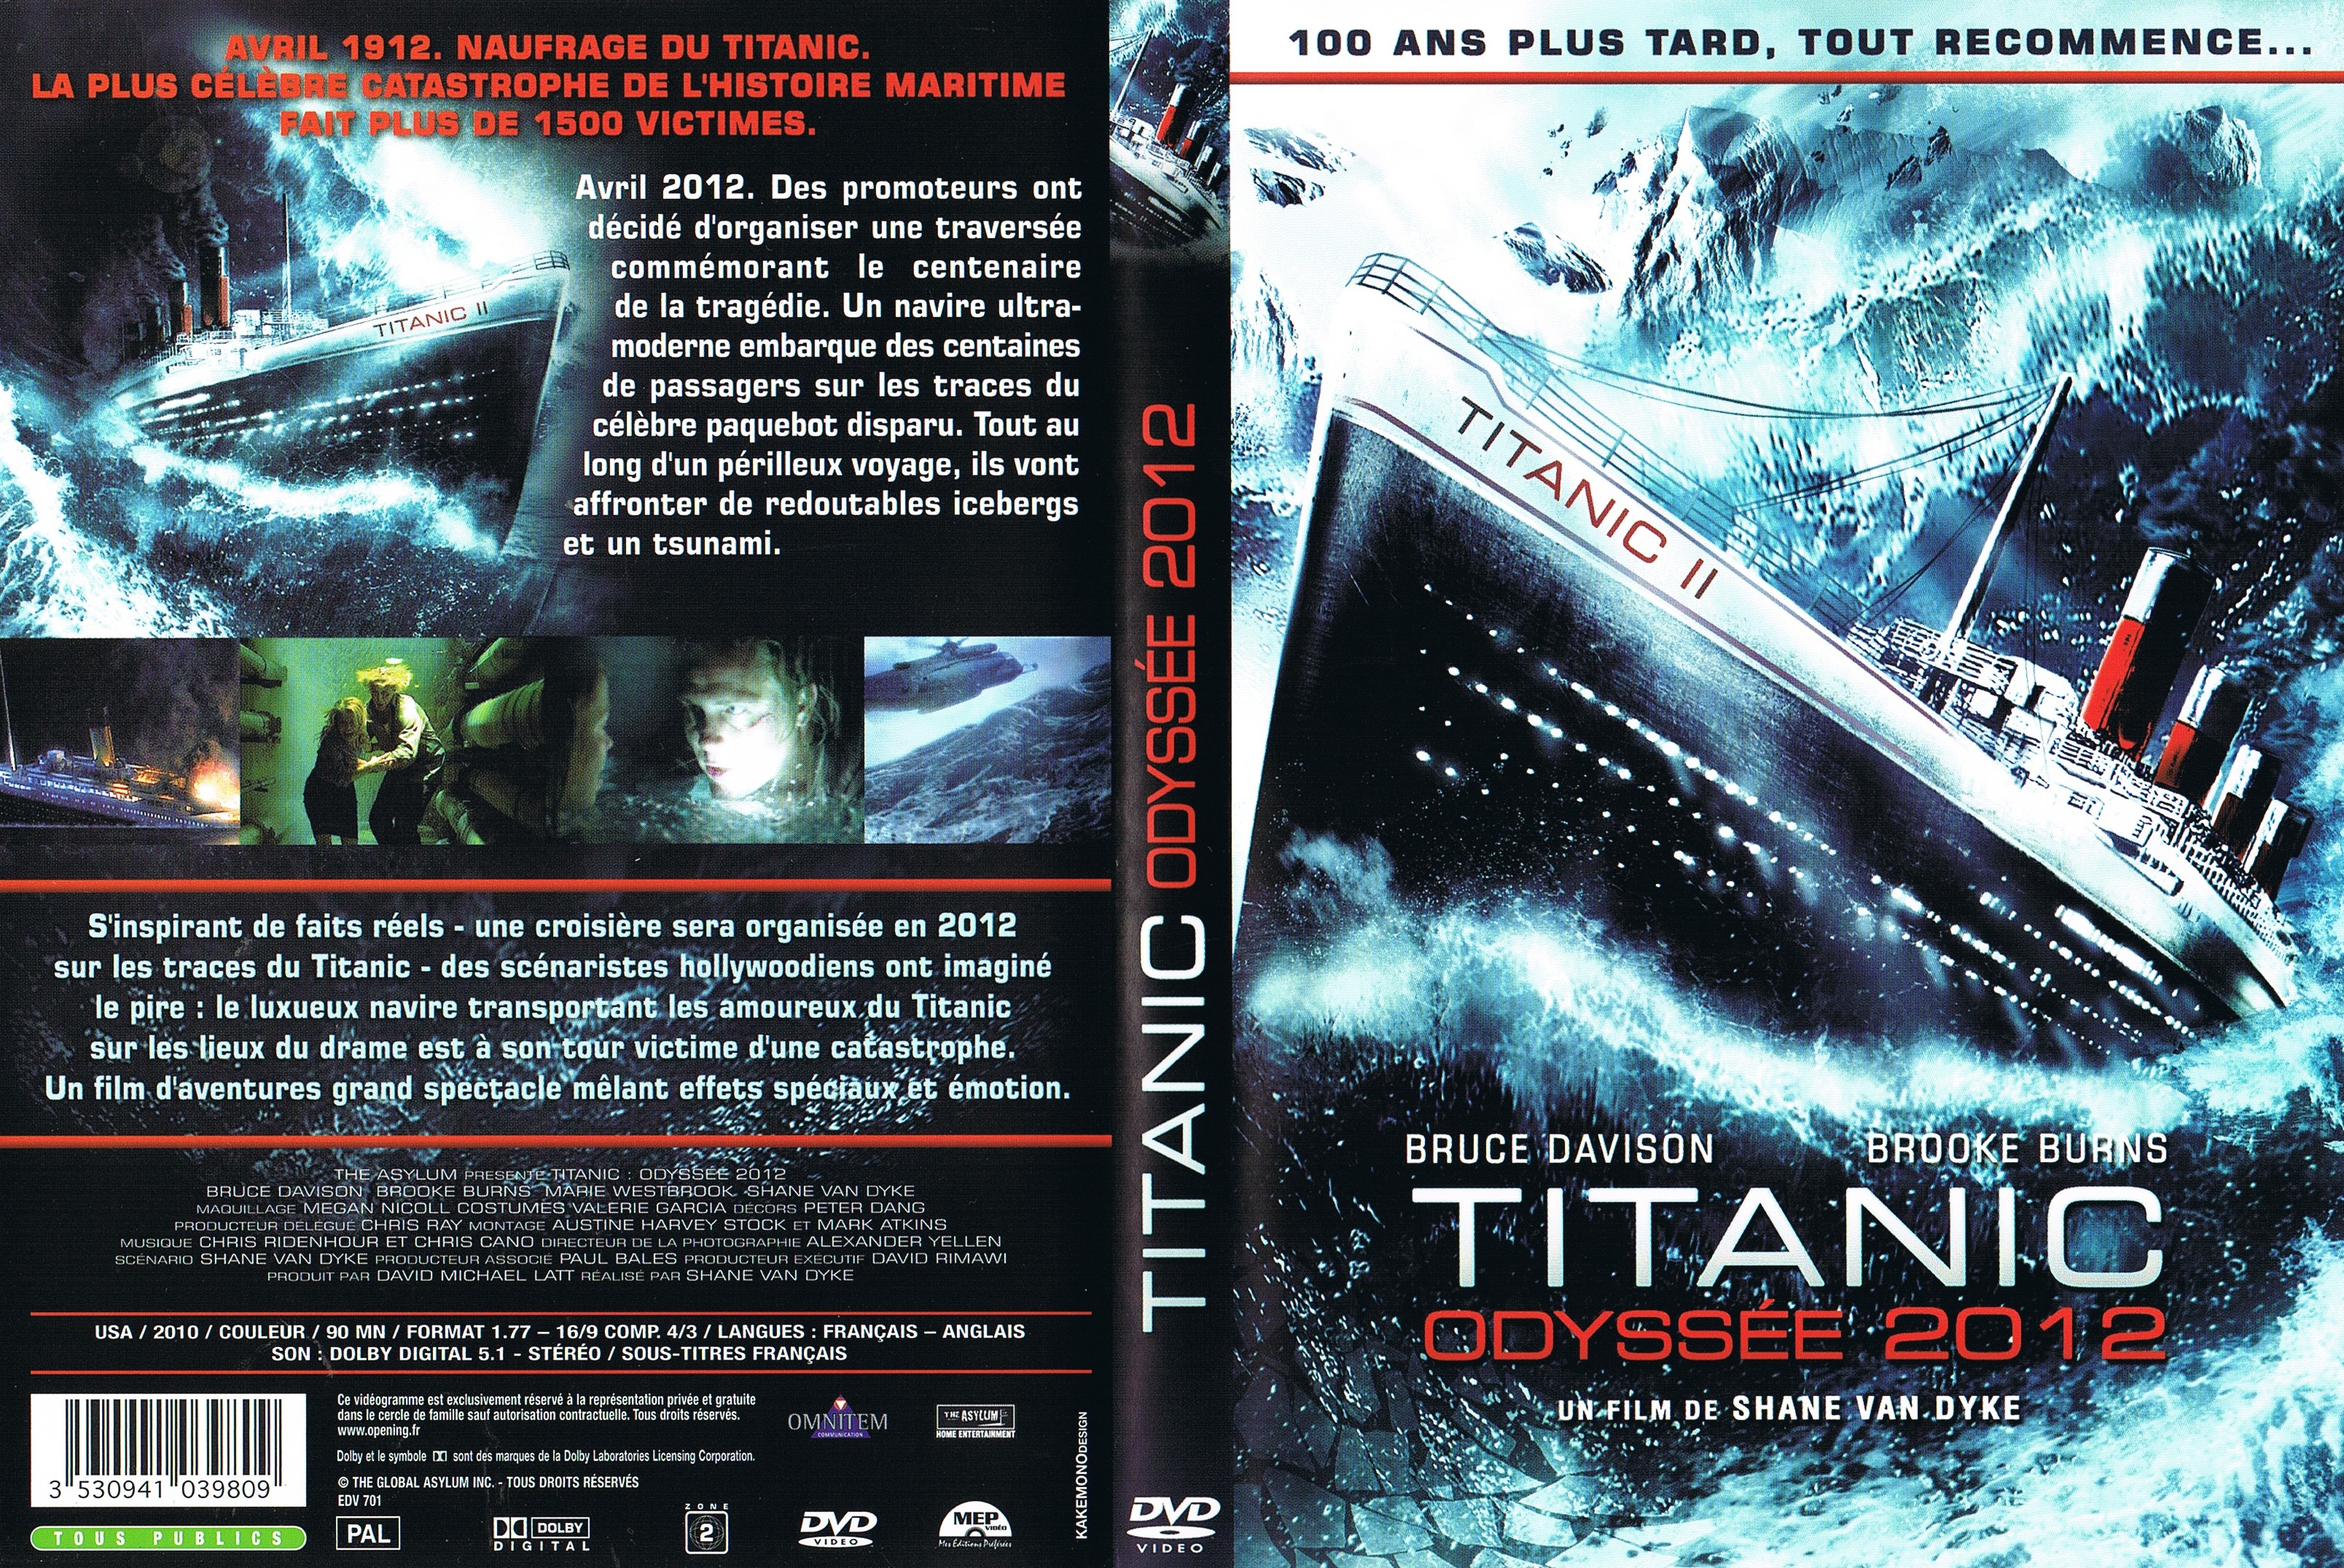 Jaquette DVD Titanic : Odysse 2012